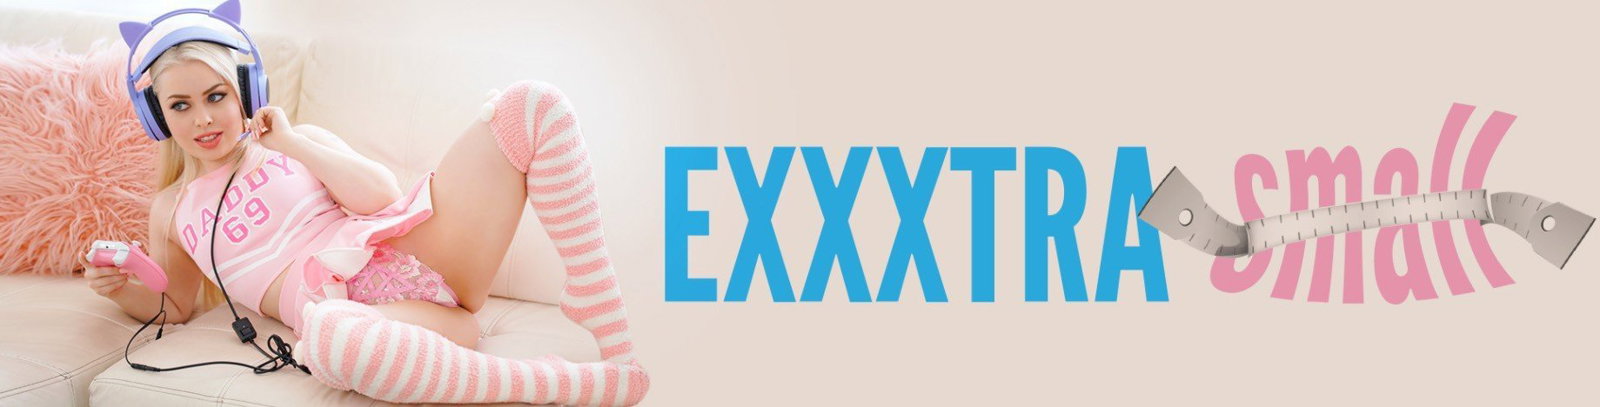 Cover photo of ExxxtraSmall